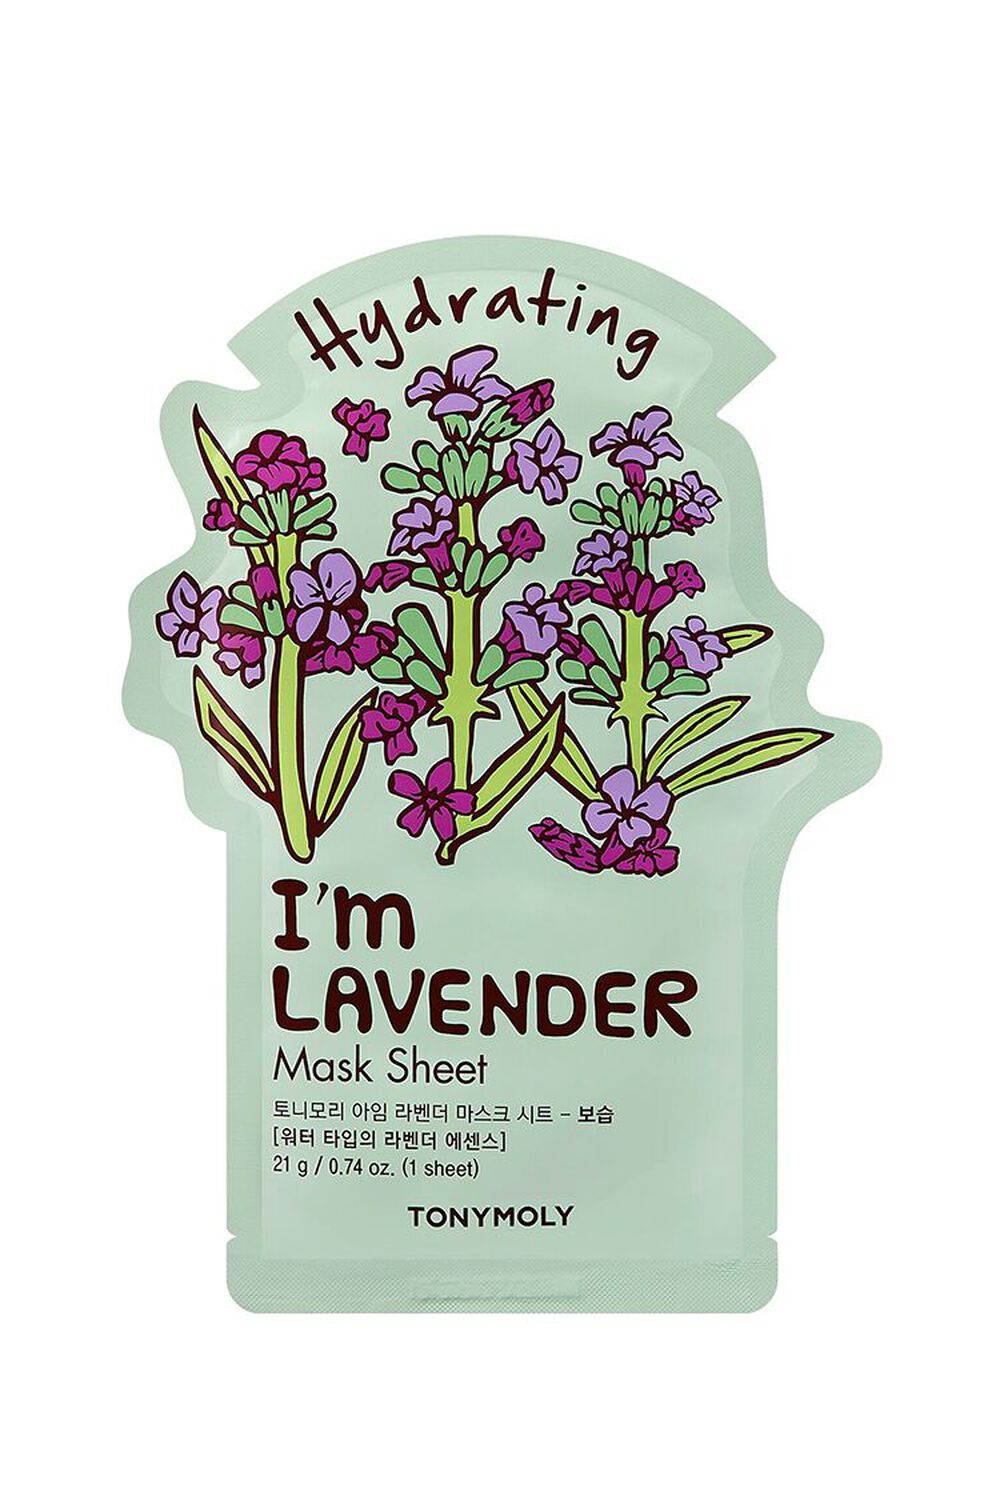 Im Lavender Sheet Mask – Hydrating, image 1